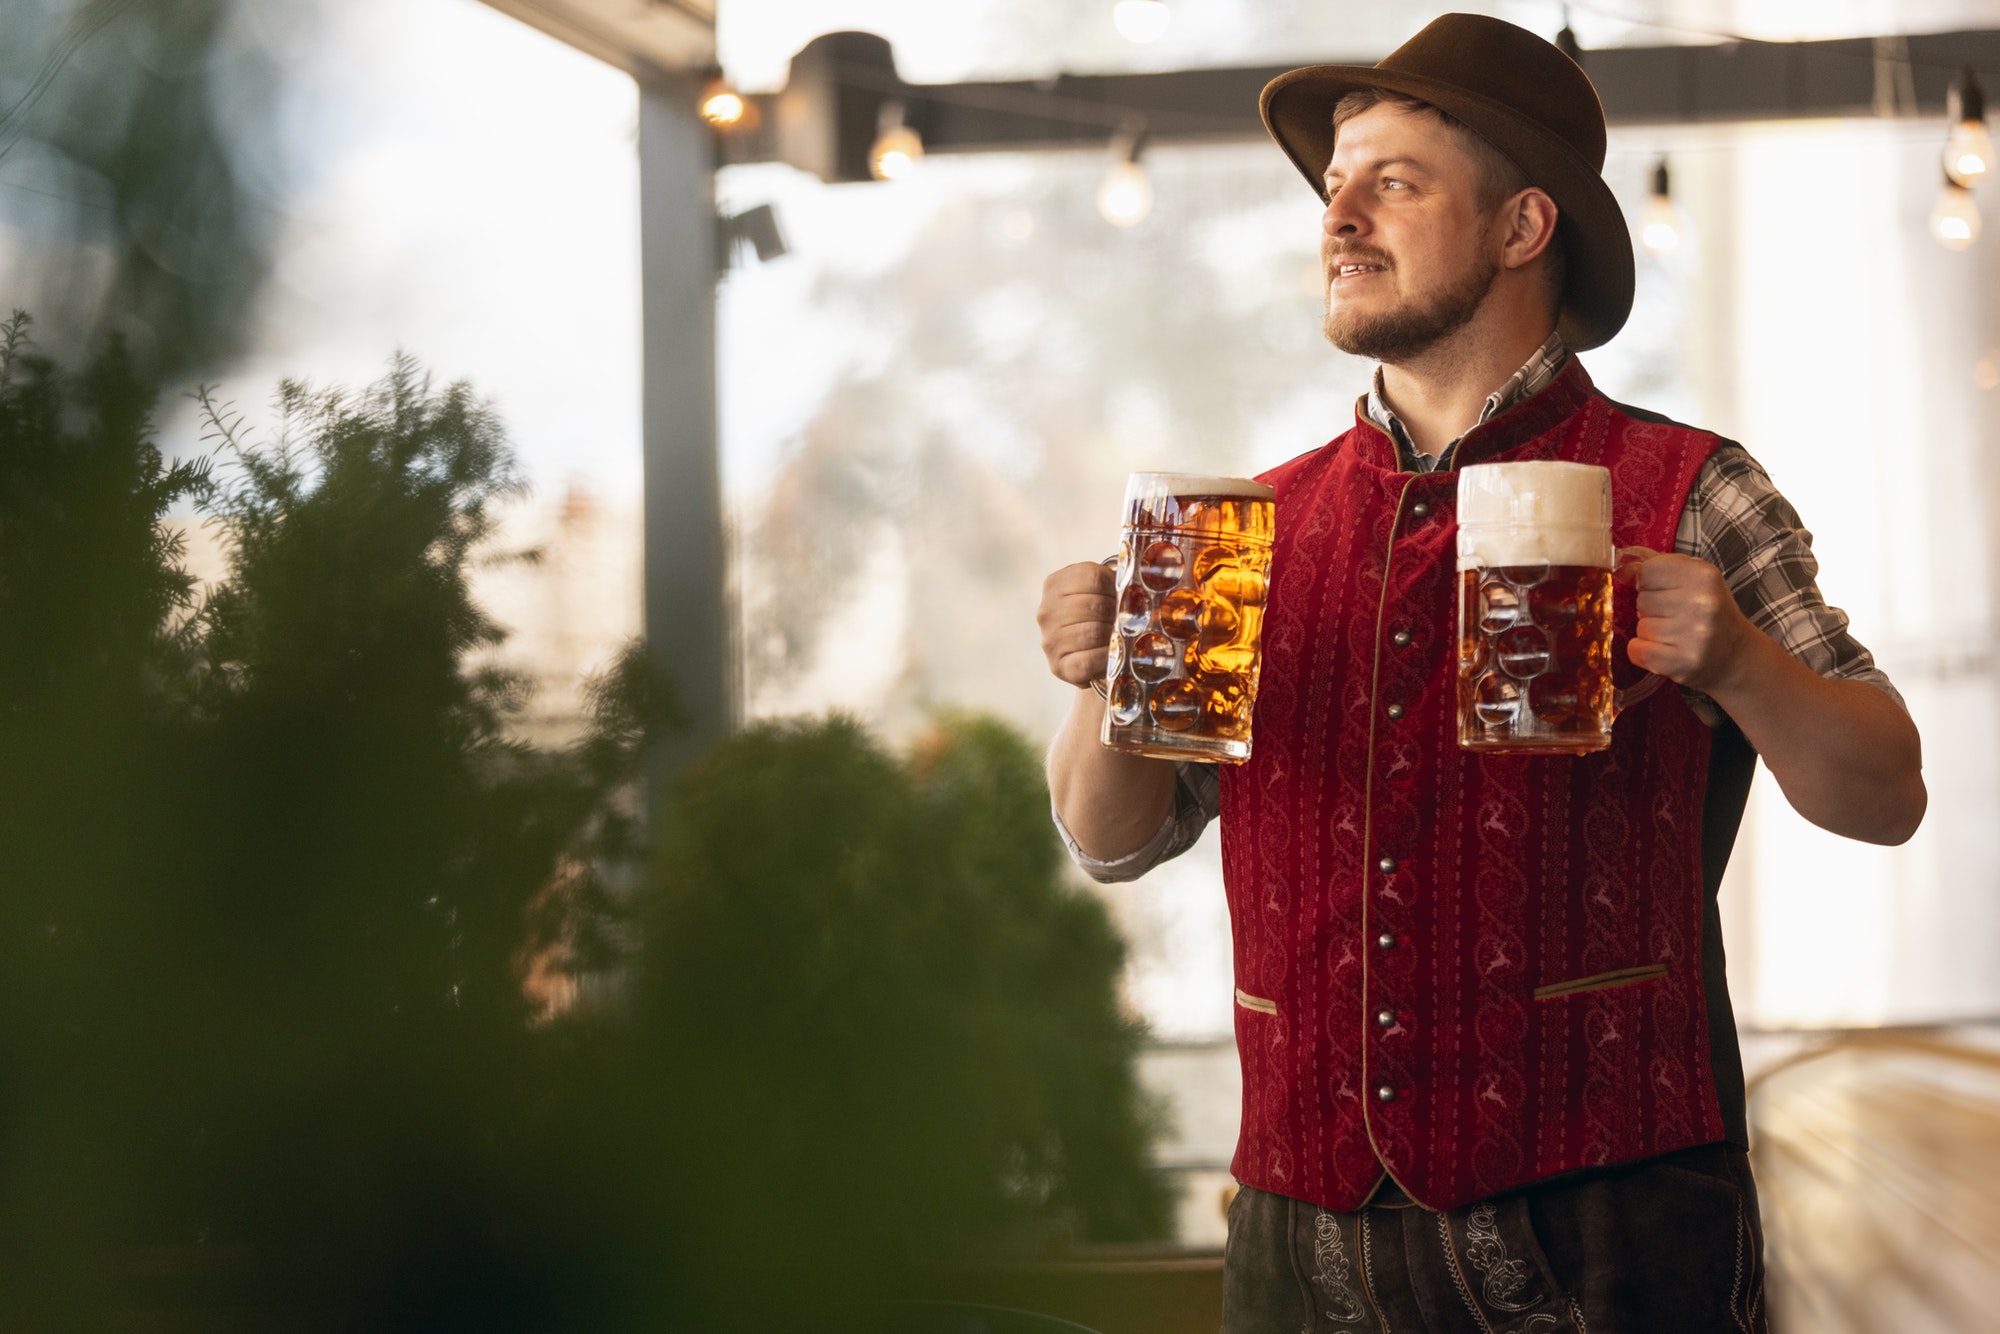 Happy smiling man, waiter in traditional Austrian or Bavarian costume holding mug, glass of dark